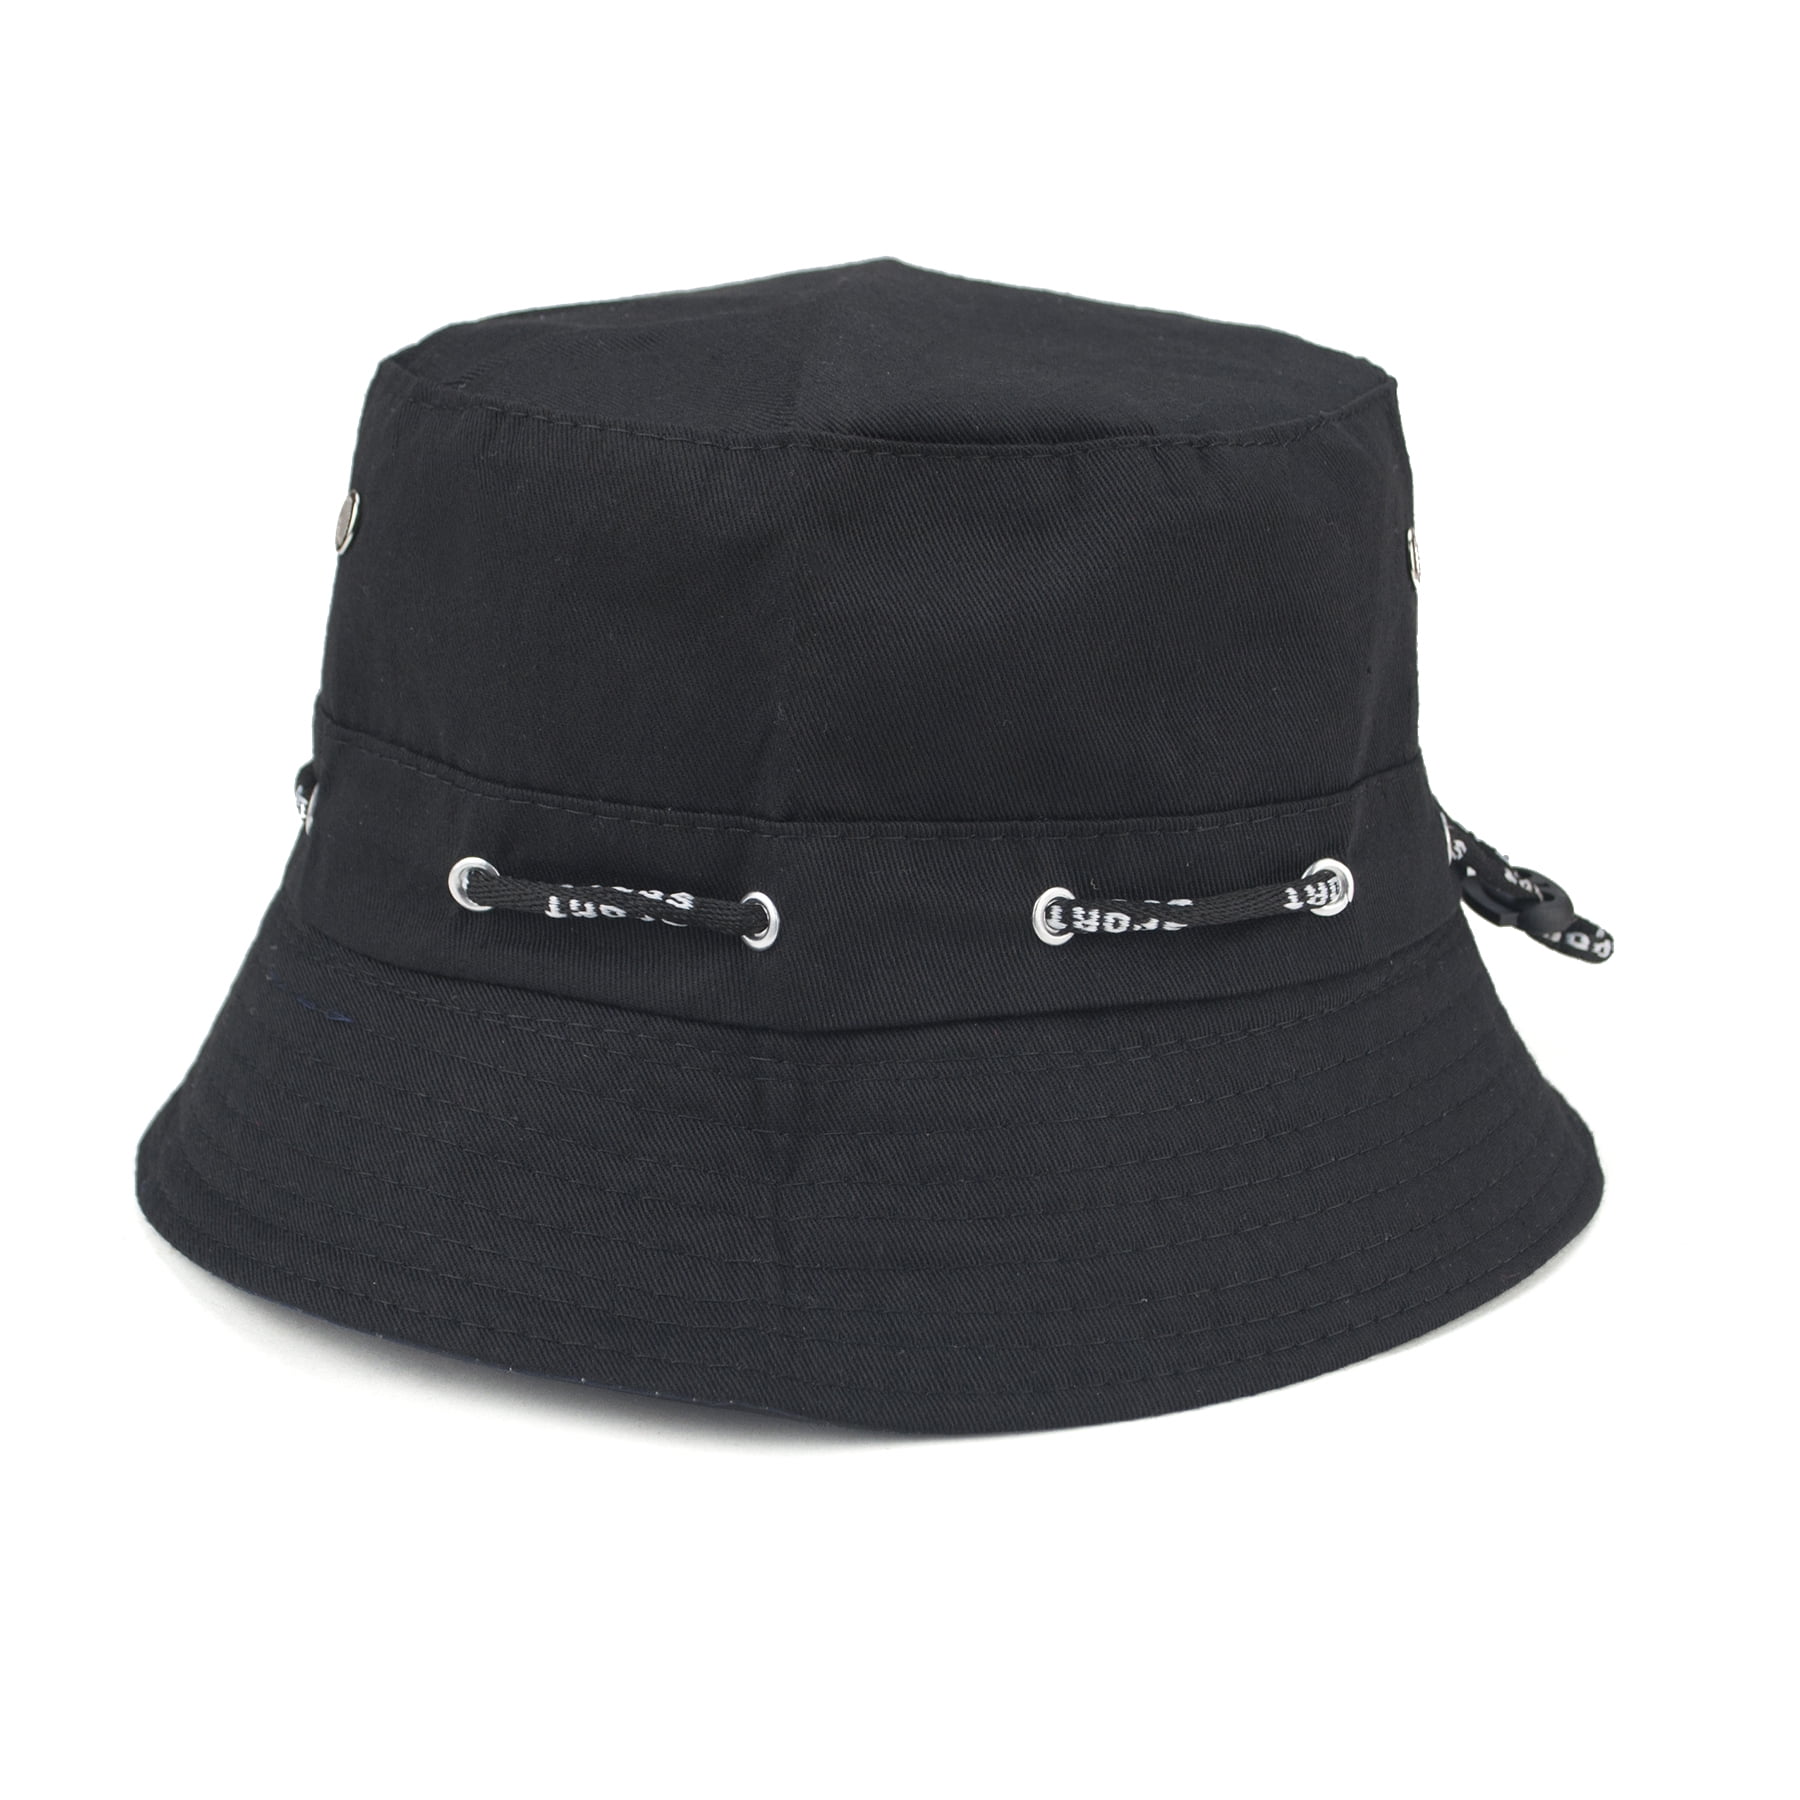 Opromo Blank Adjustable Cotton Twill Bucket Hat Outdoor Summer Fishing ...